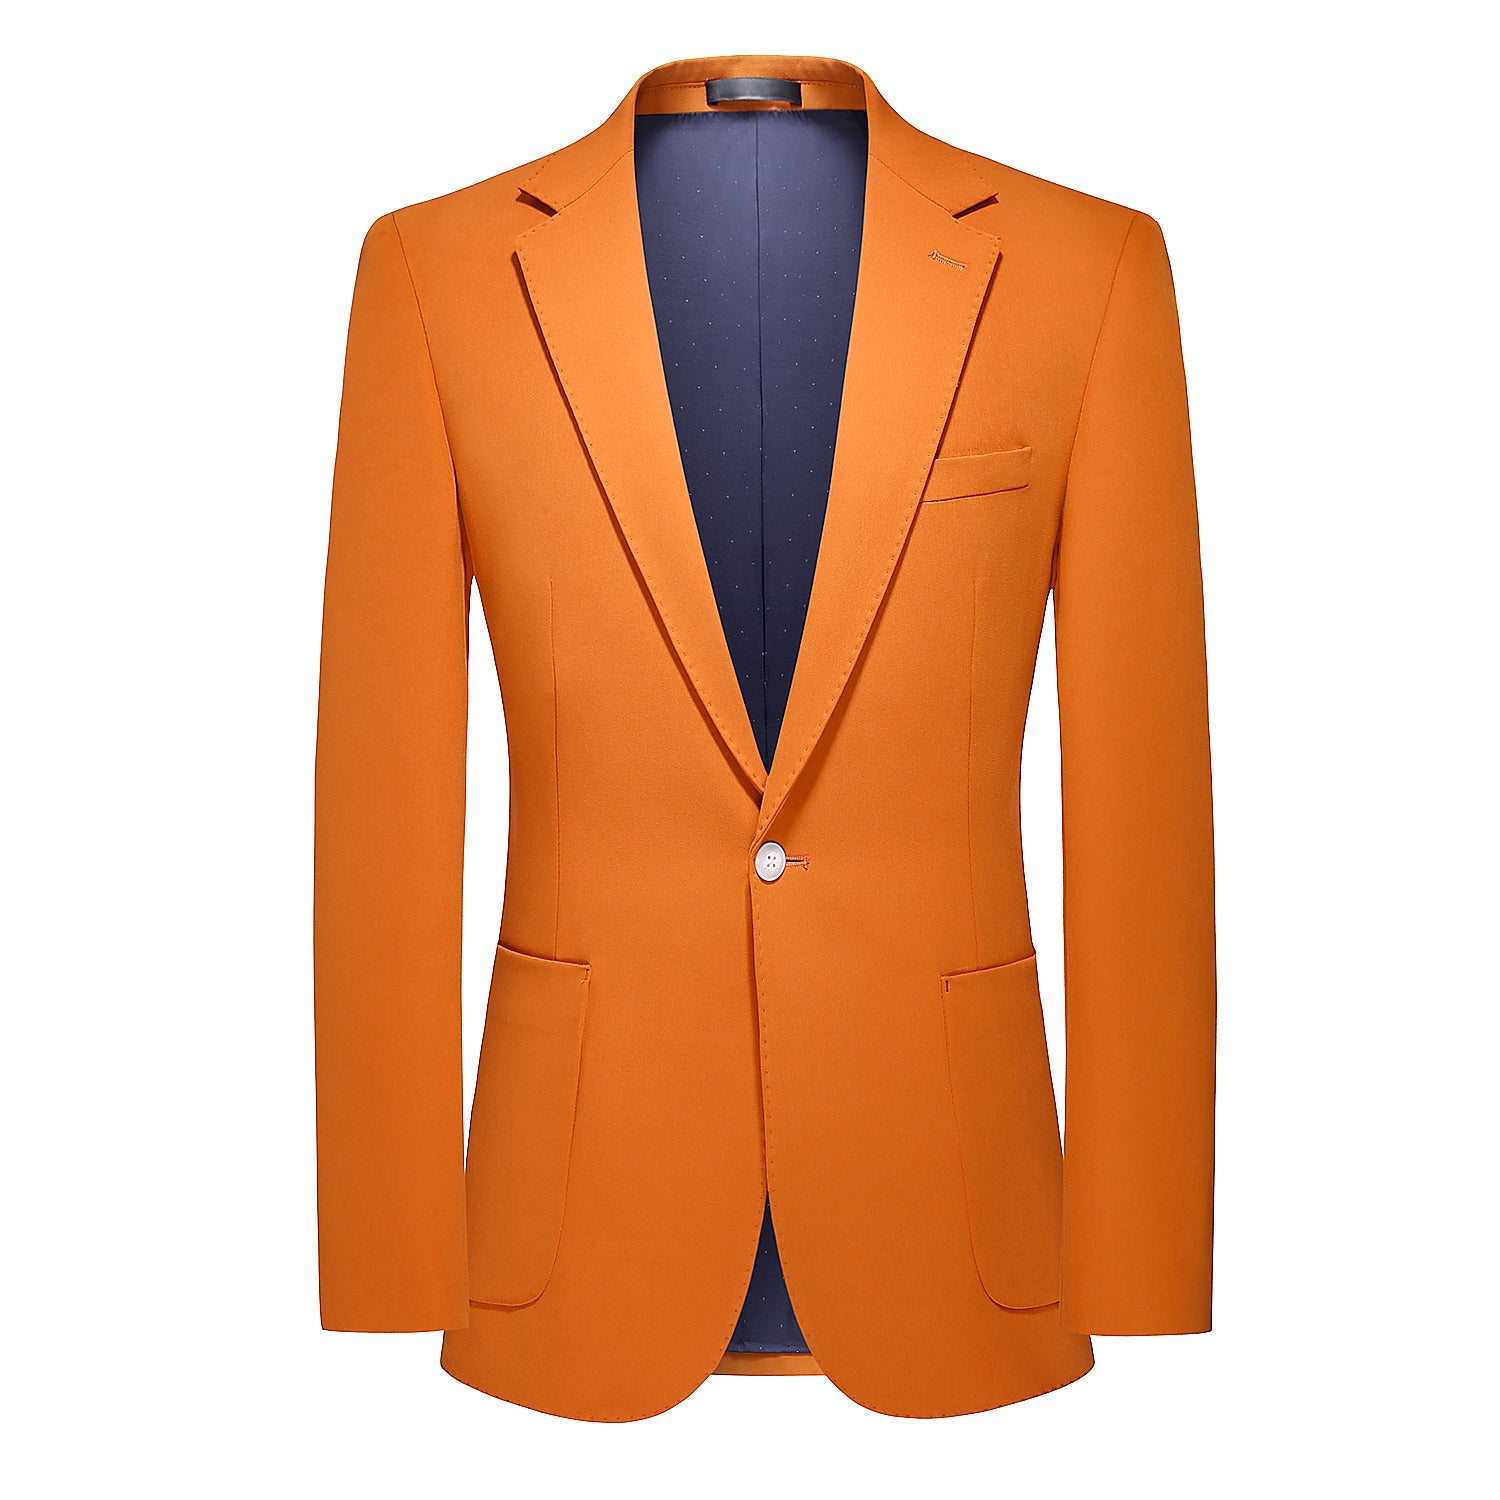 Mens Suit Jacket One Button in Orange